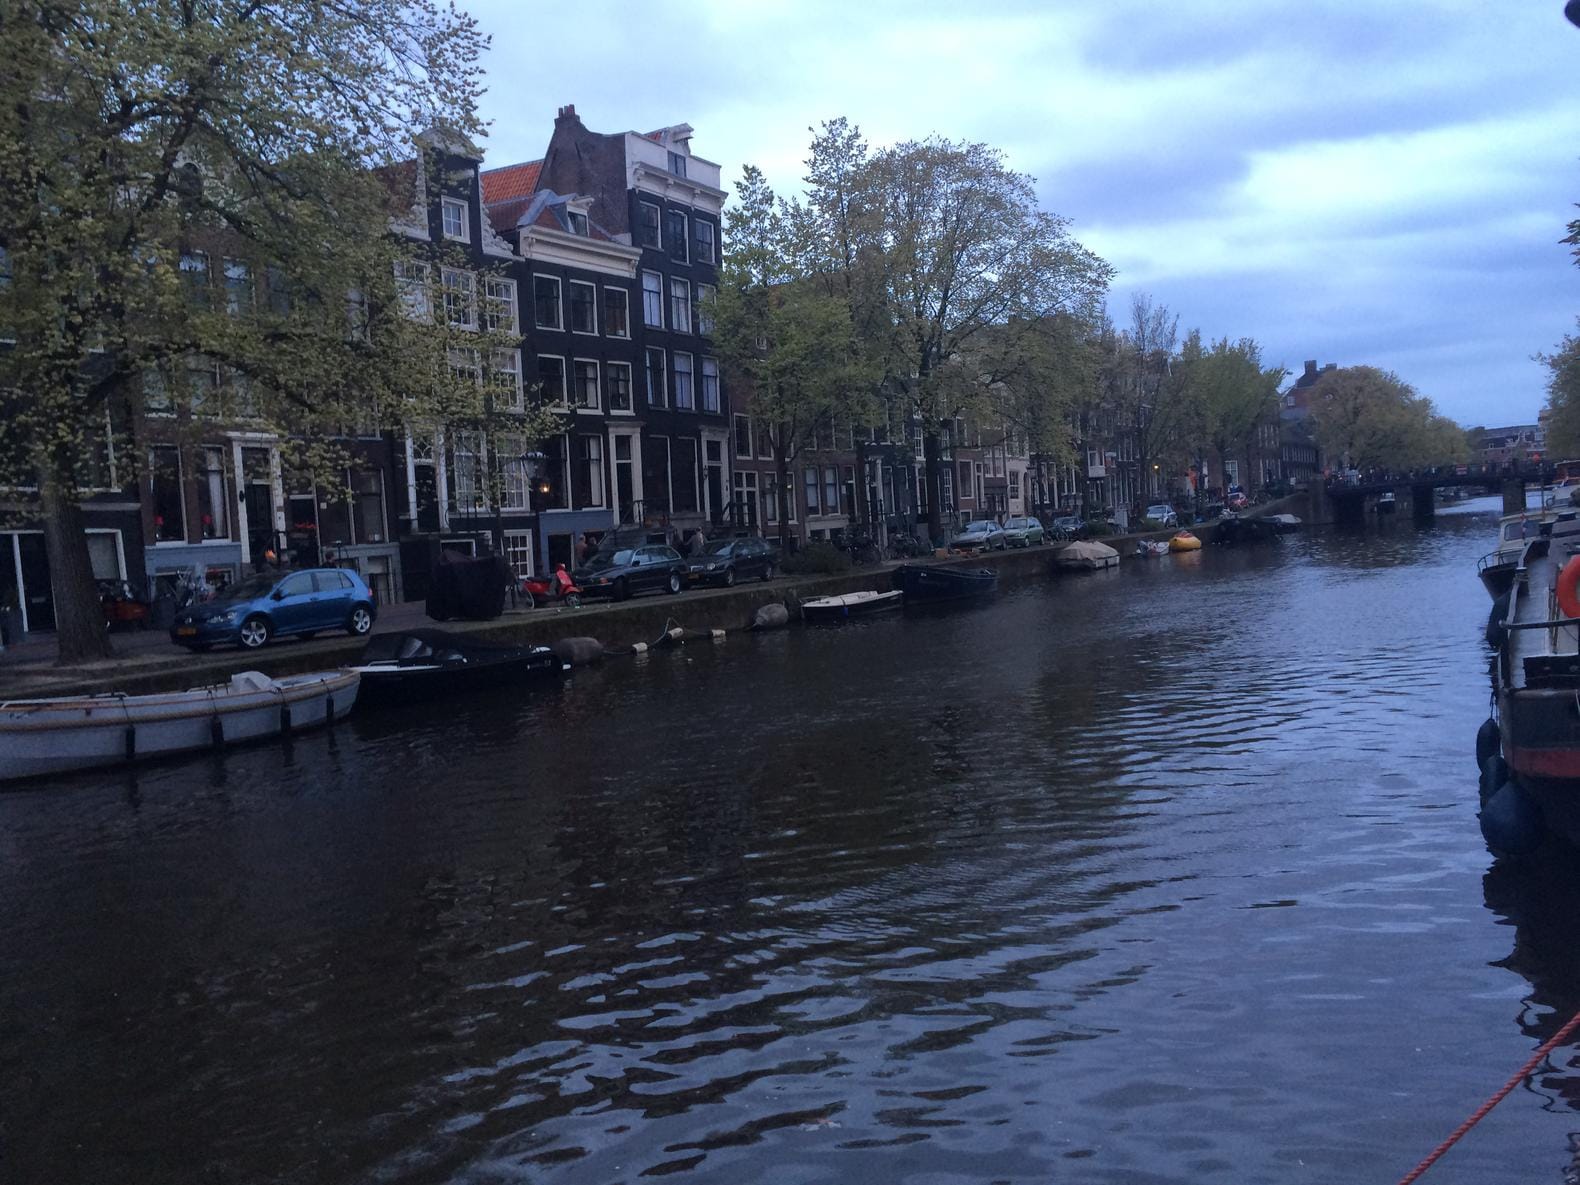 Terugkijken: Dit was Koningsdag 2017 in Amsterdam